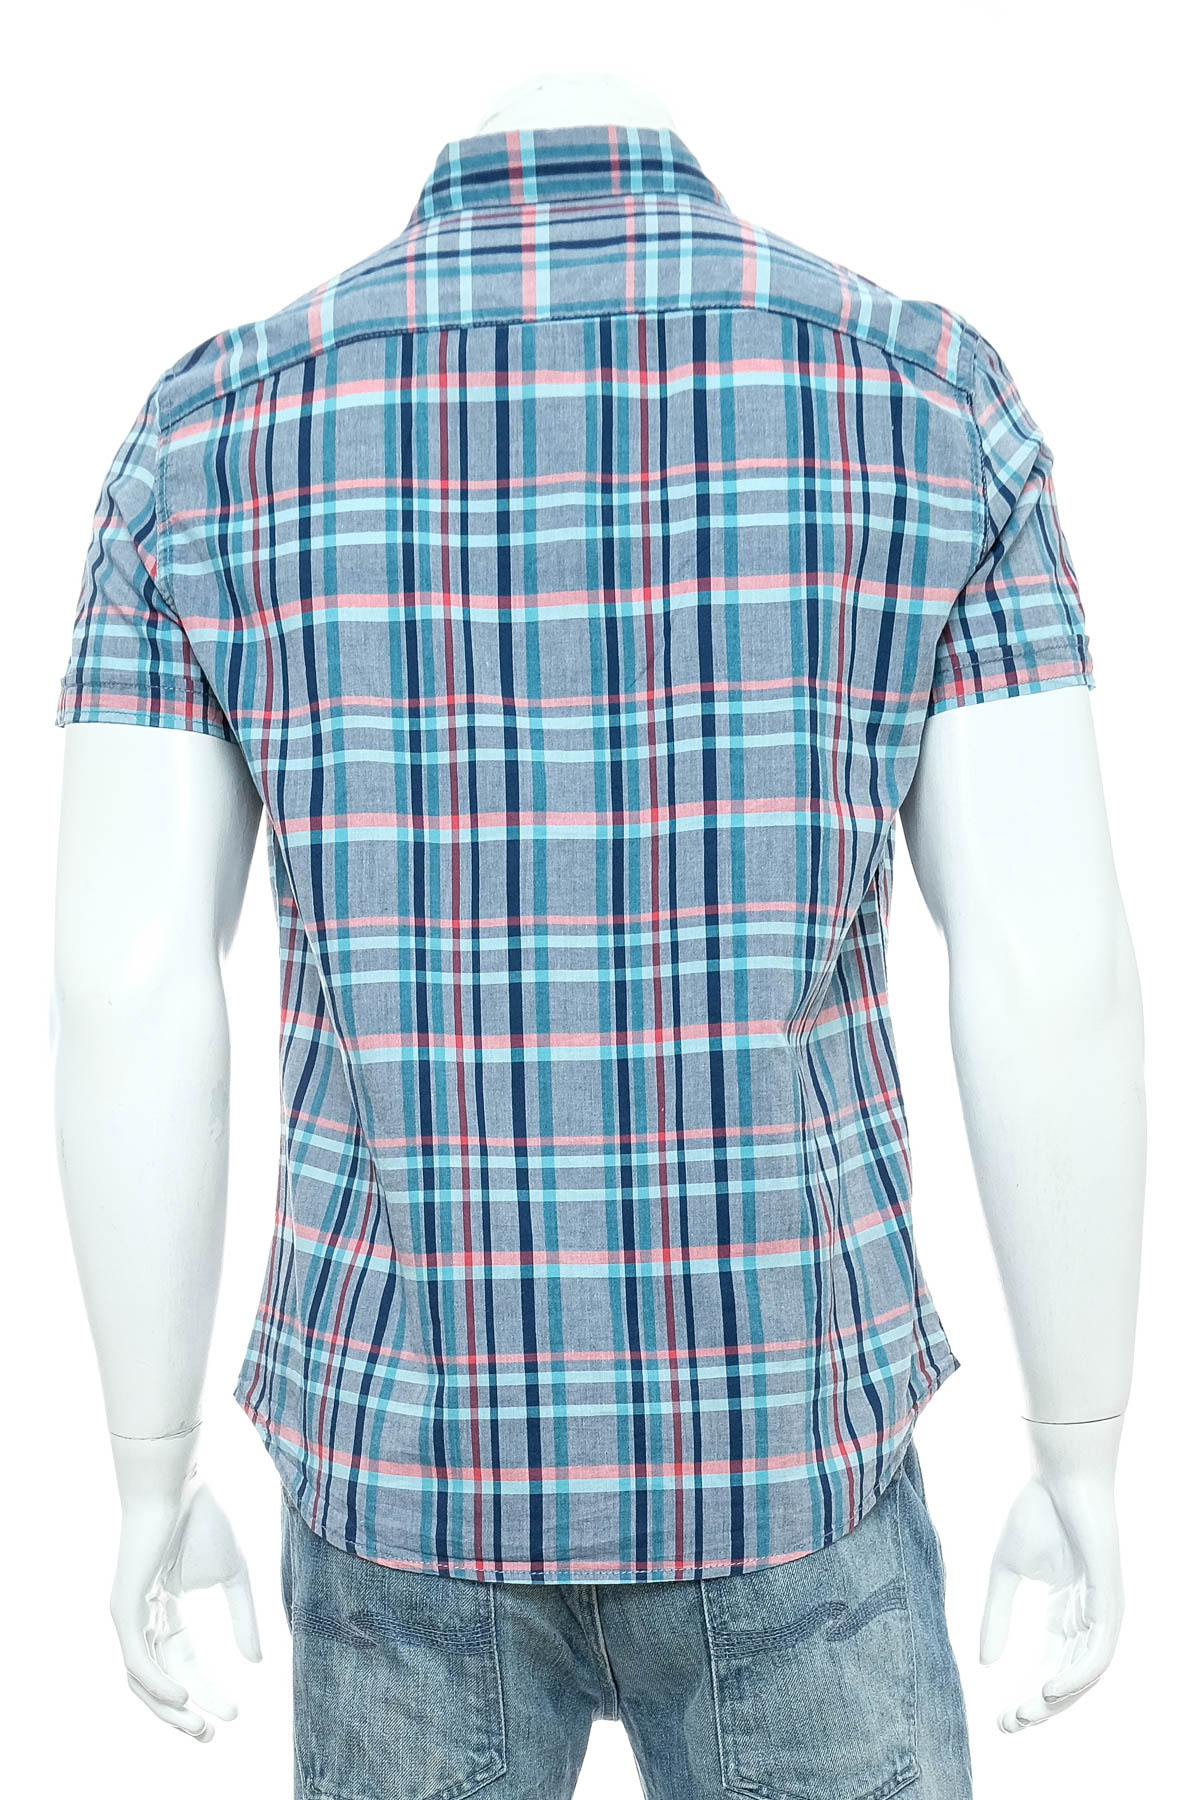 Men's shirt - Angelo Litrico - 1